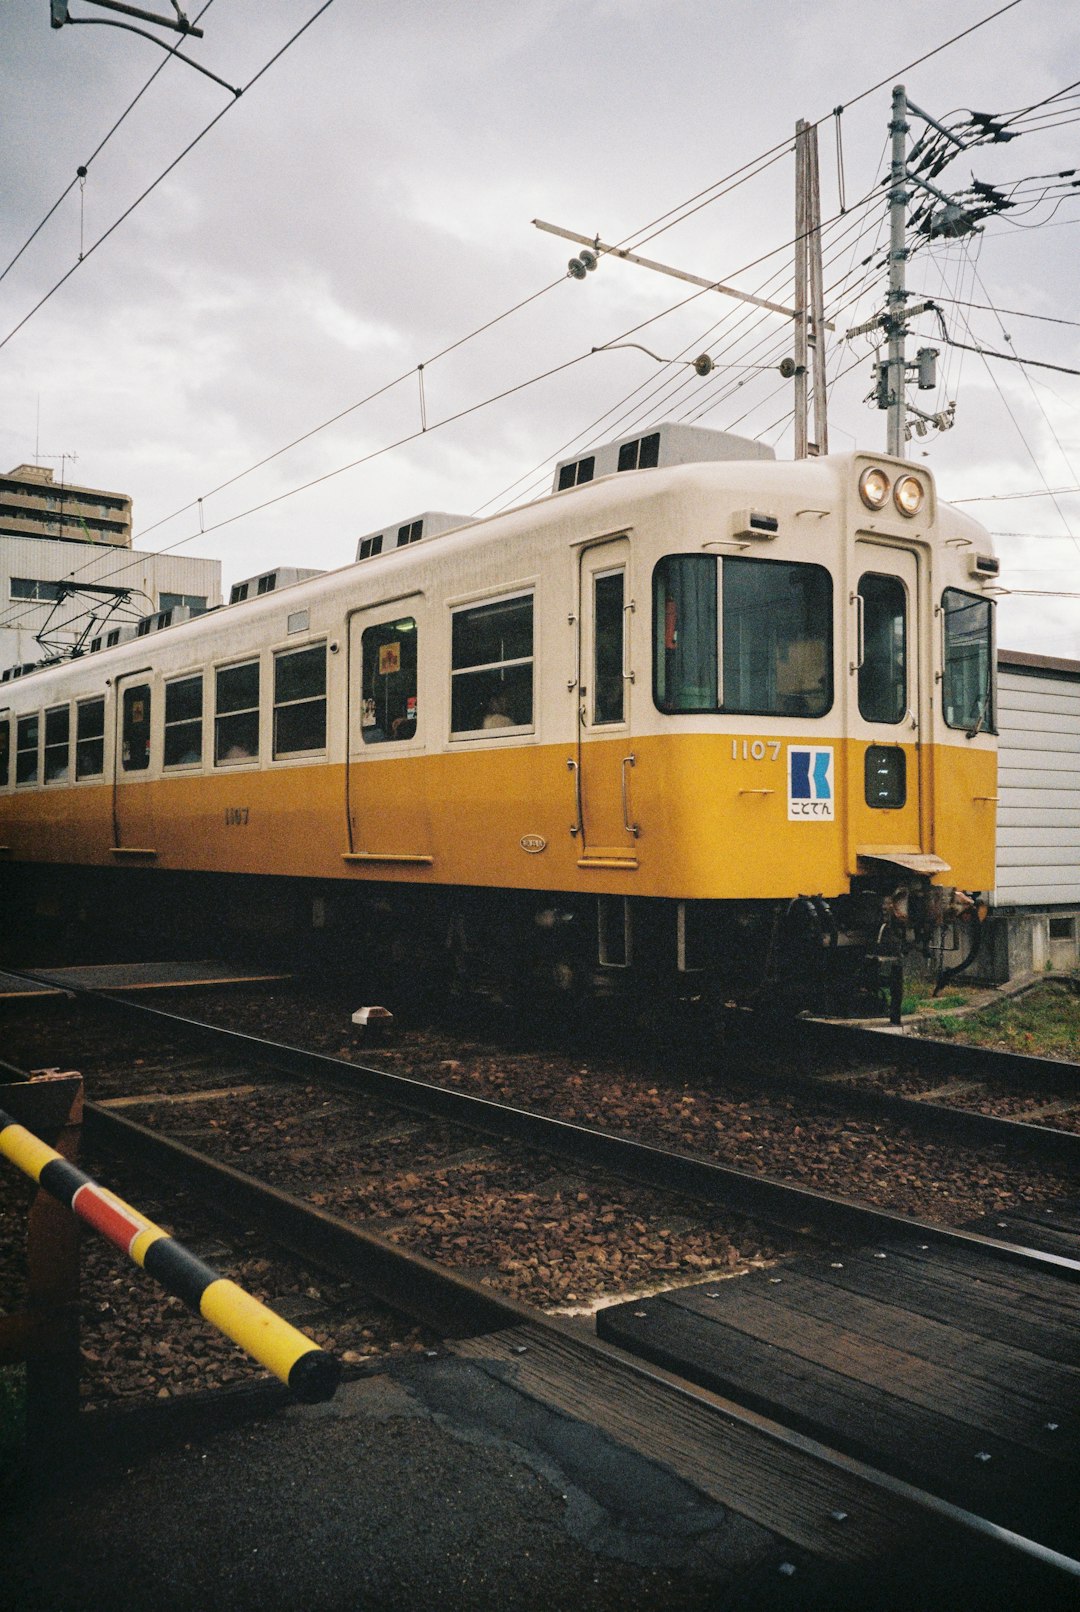 white and yellow train on rail tracks